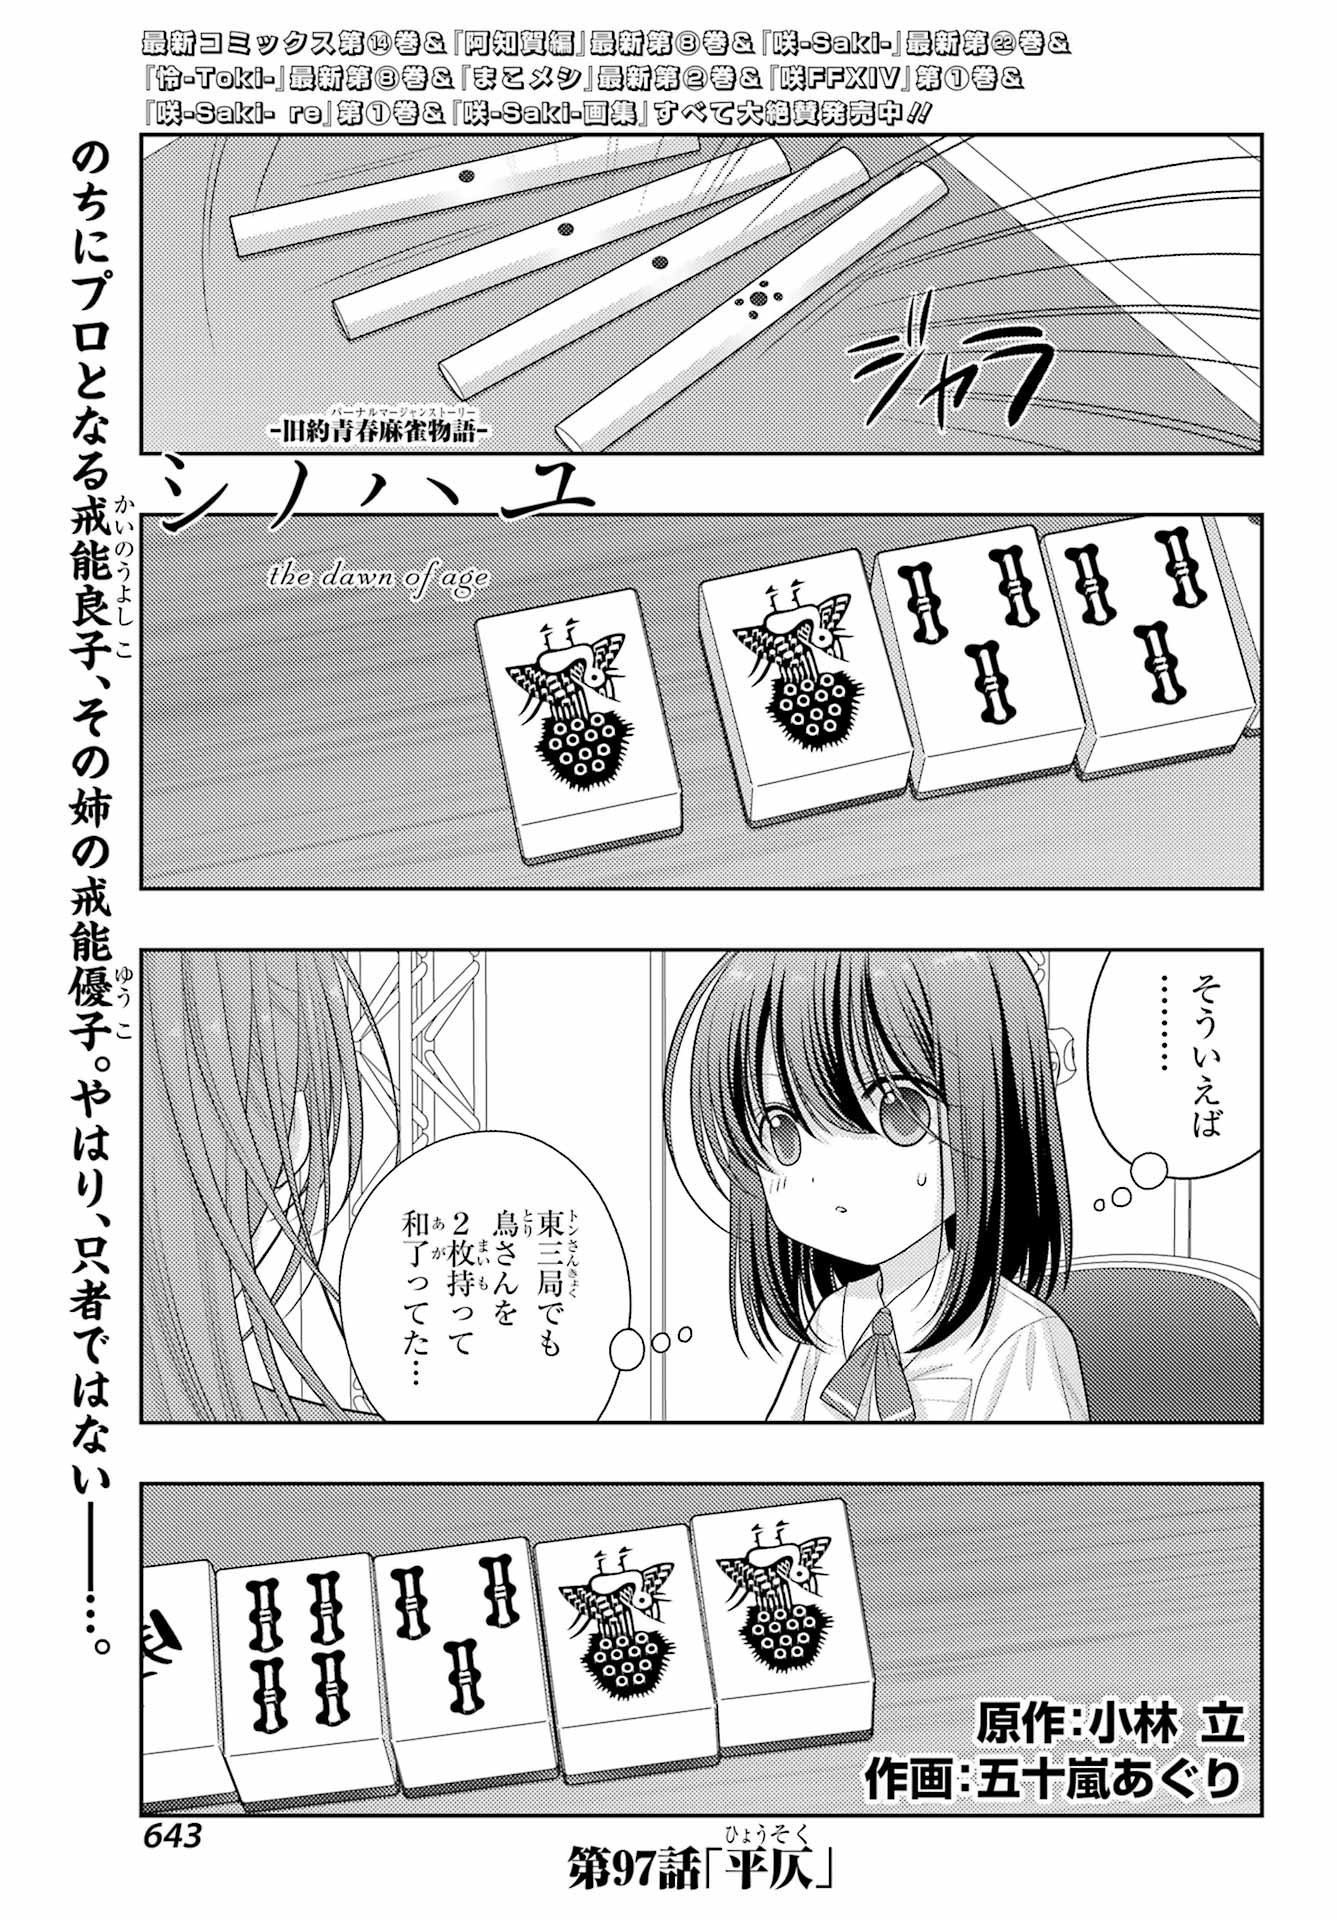 Shinohayu - The Dawn of Age Manga - Chapter 097 - Page 1